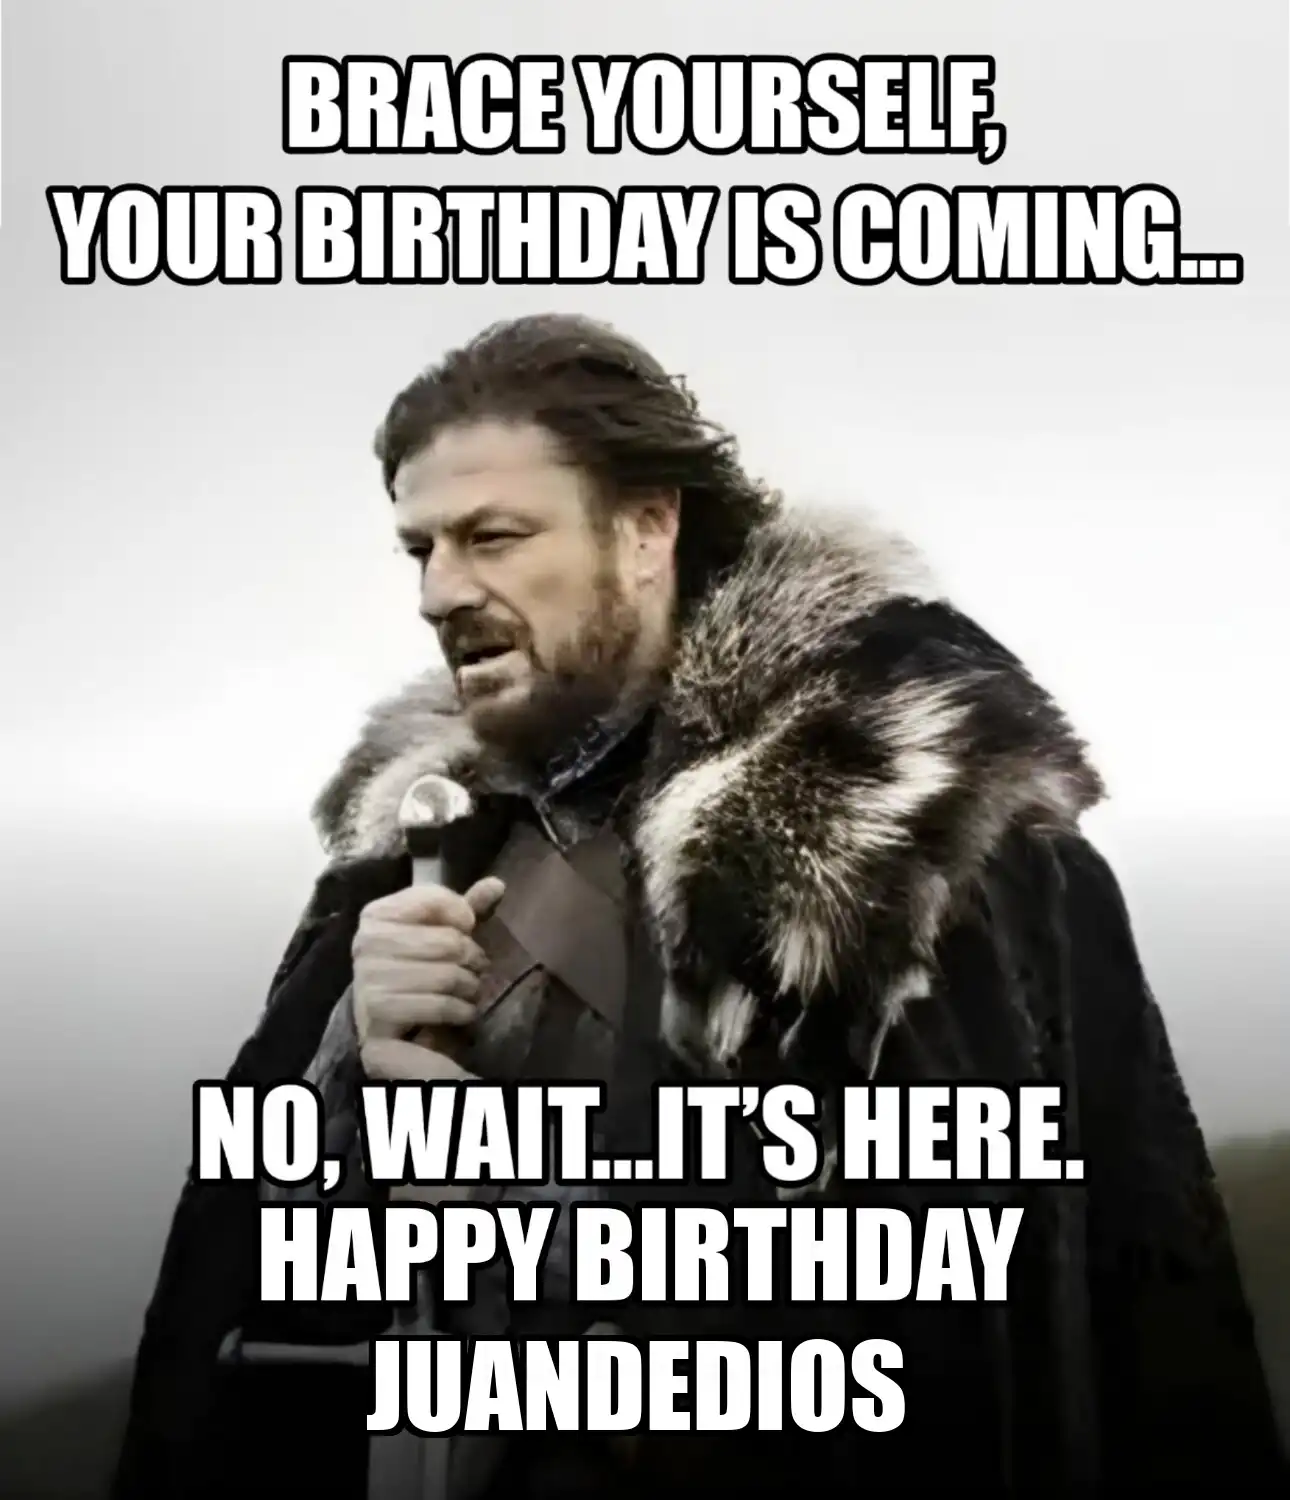 Happy Birthday Juandedios Brace Yourself Your Birthday Is Coming Meme